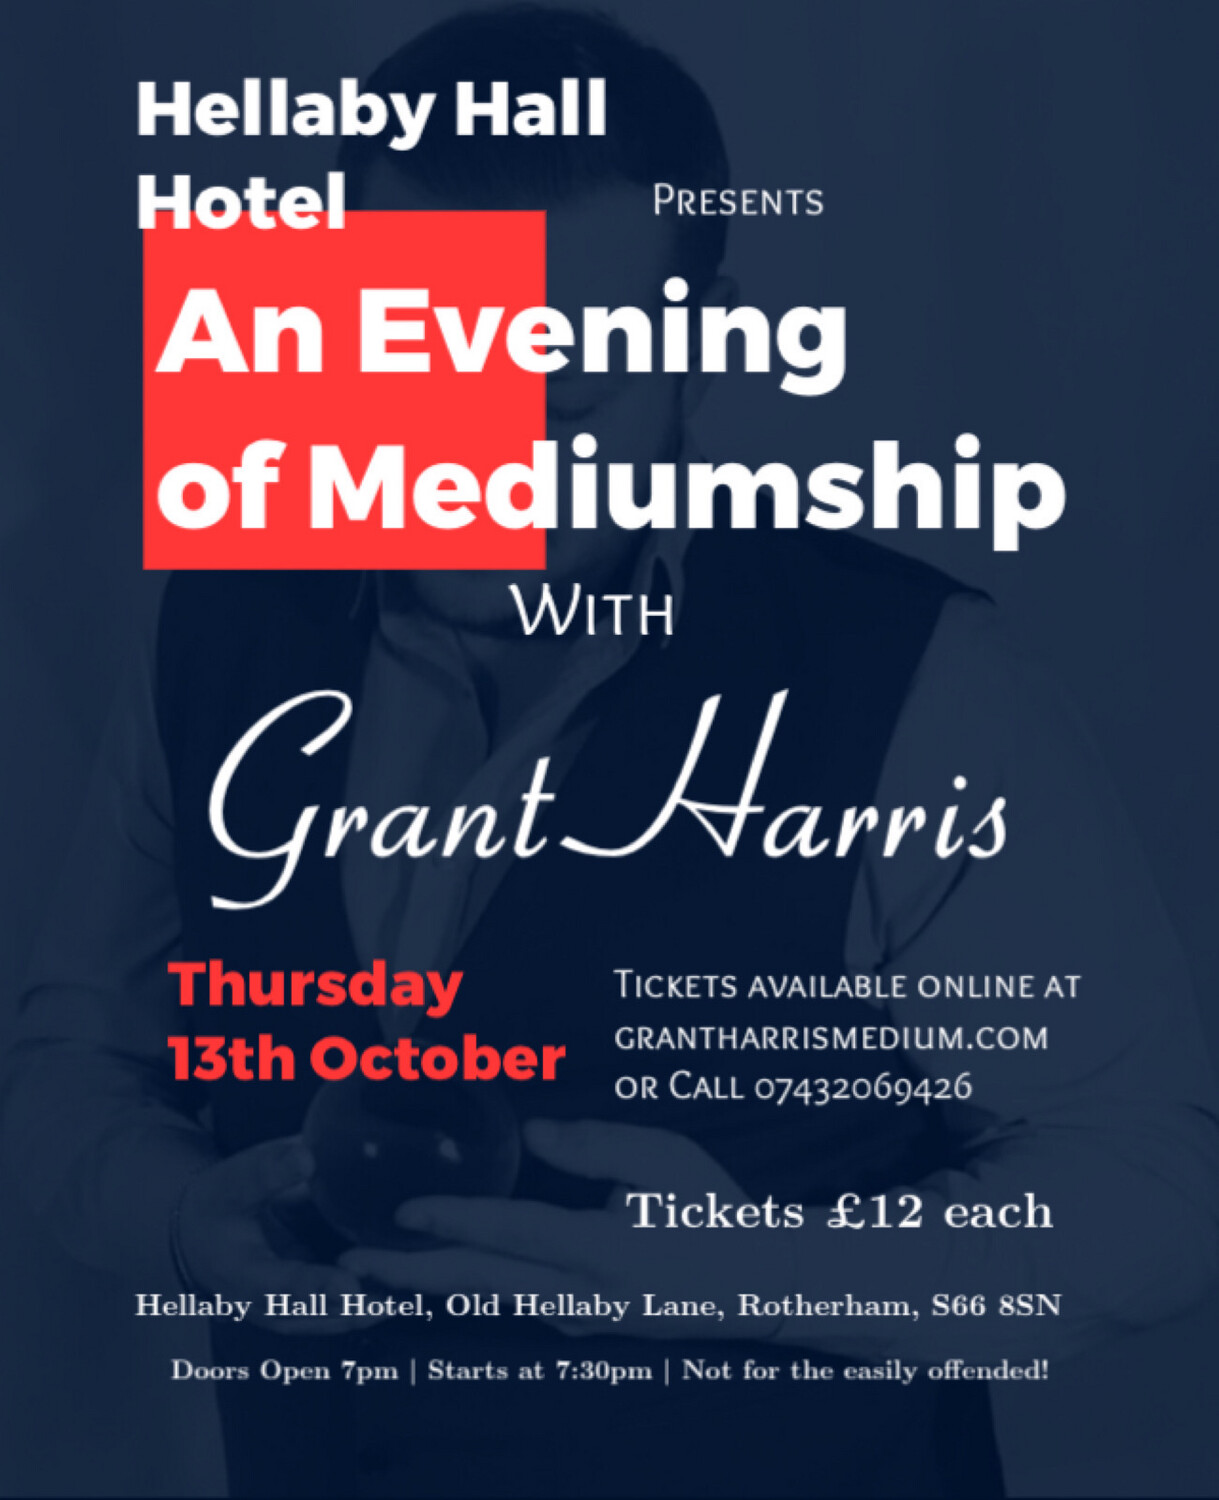 Evening of Mediumship, Hellaby Hall Hotel, Thu 13th October 2022